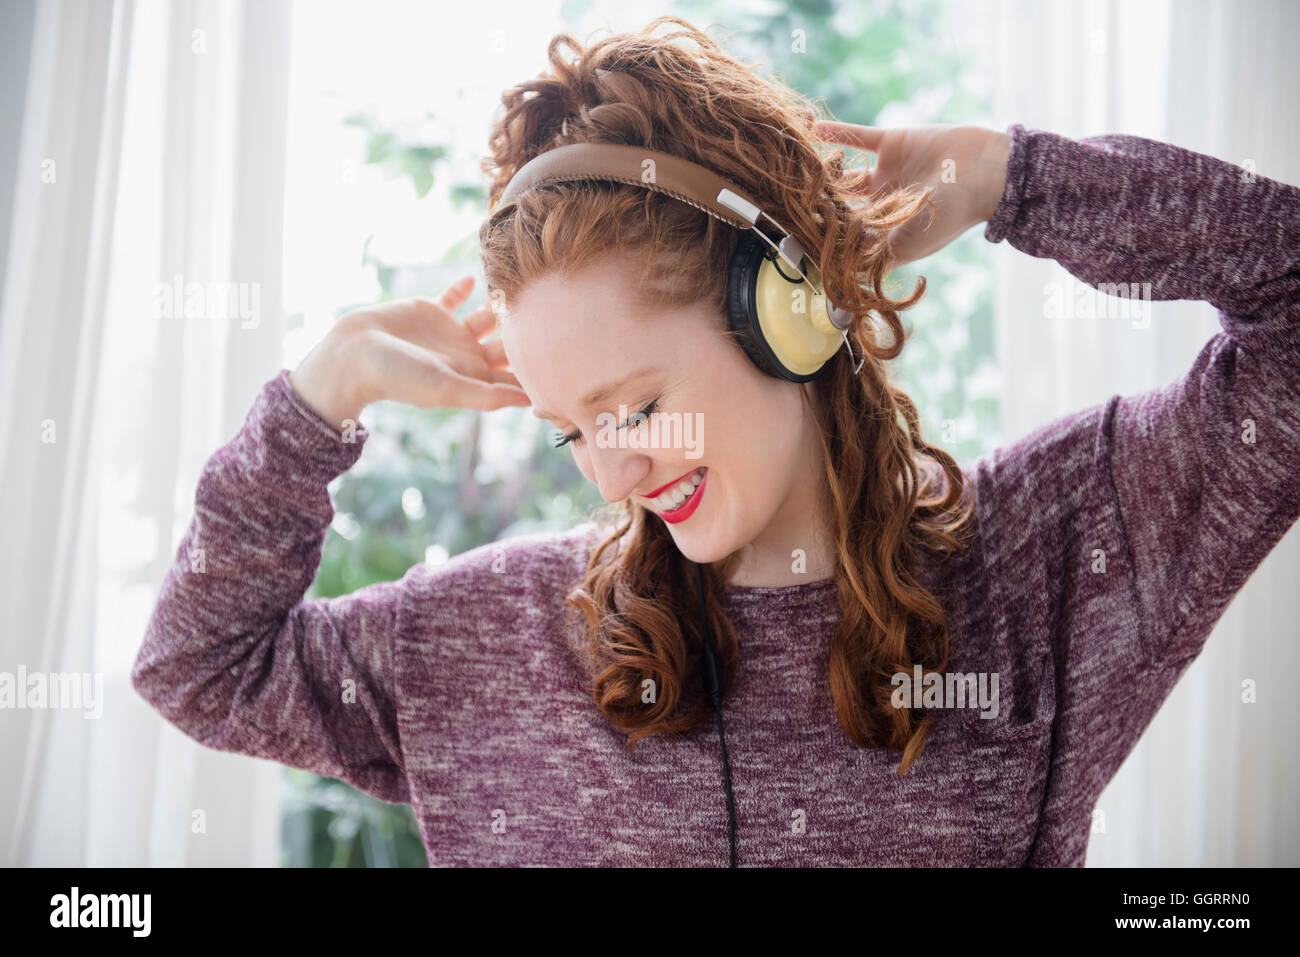 Caucasian woman listening to headphones and dancing Stock Photo